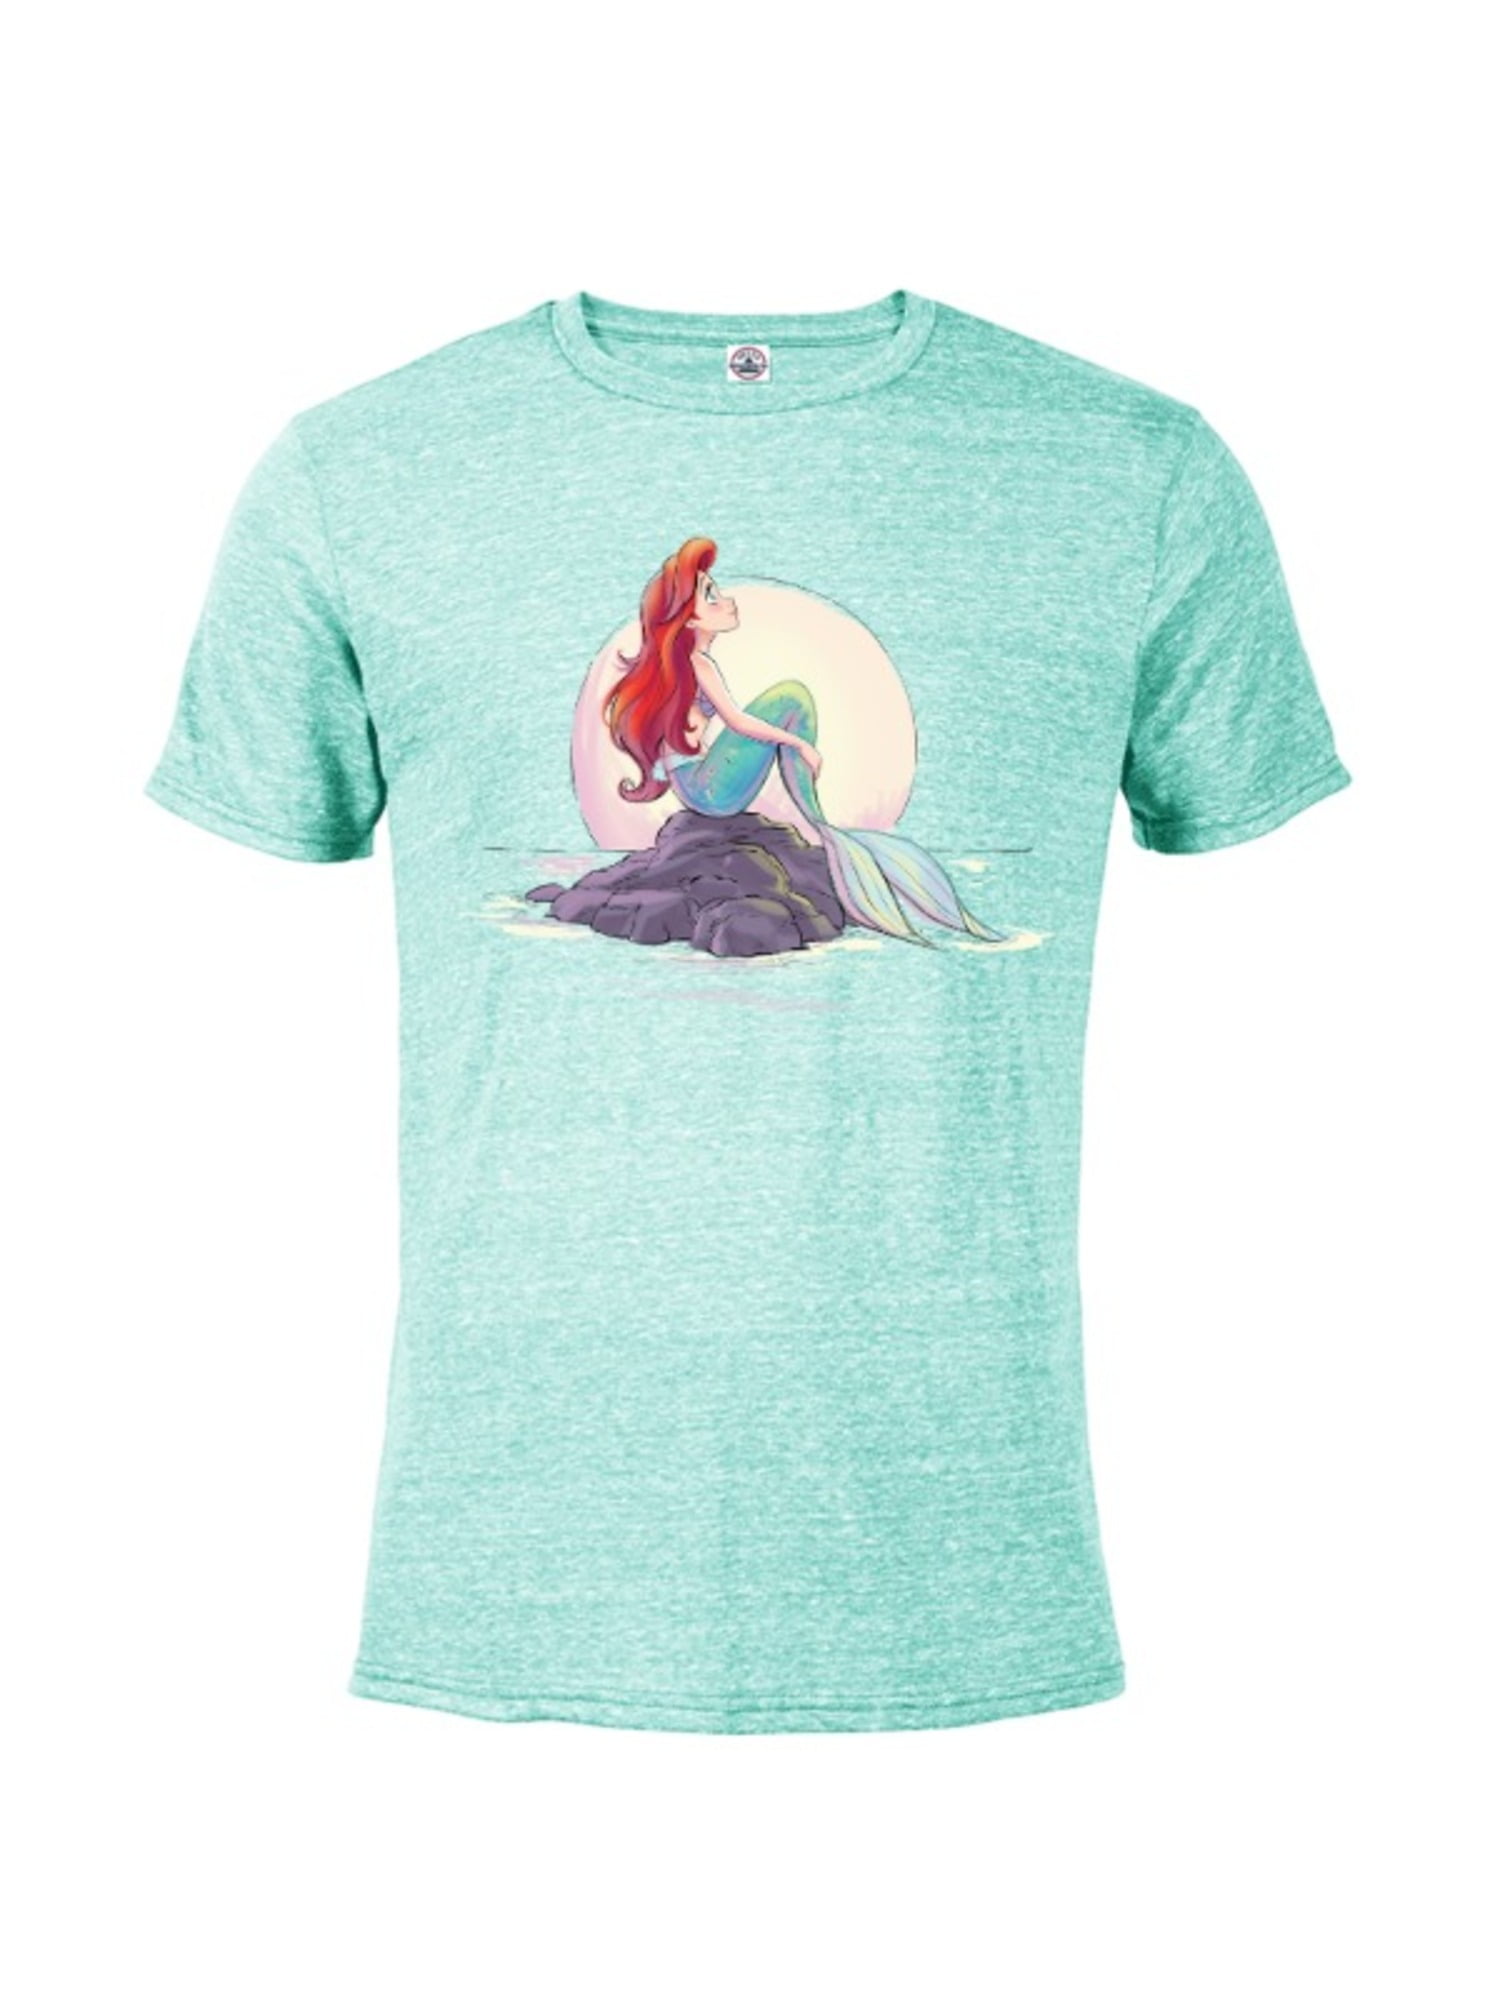 Birthday Girl Shirt Ariel Mermaid Shirt Cute Mermaid Shirt The Little Mermaid Arial Disney Shirt Disney Family Shirt Disneyland Shirt